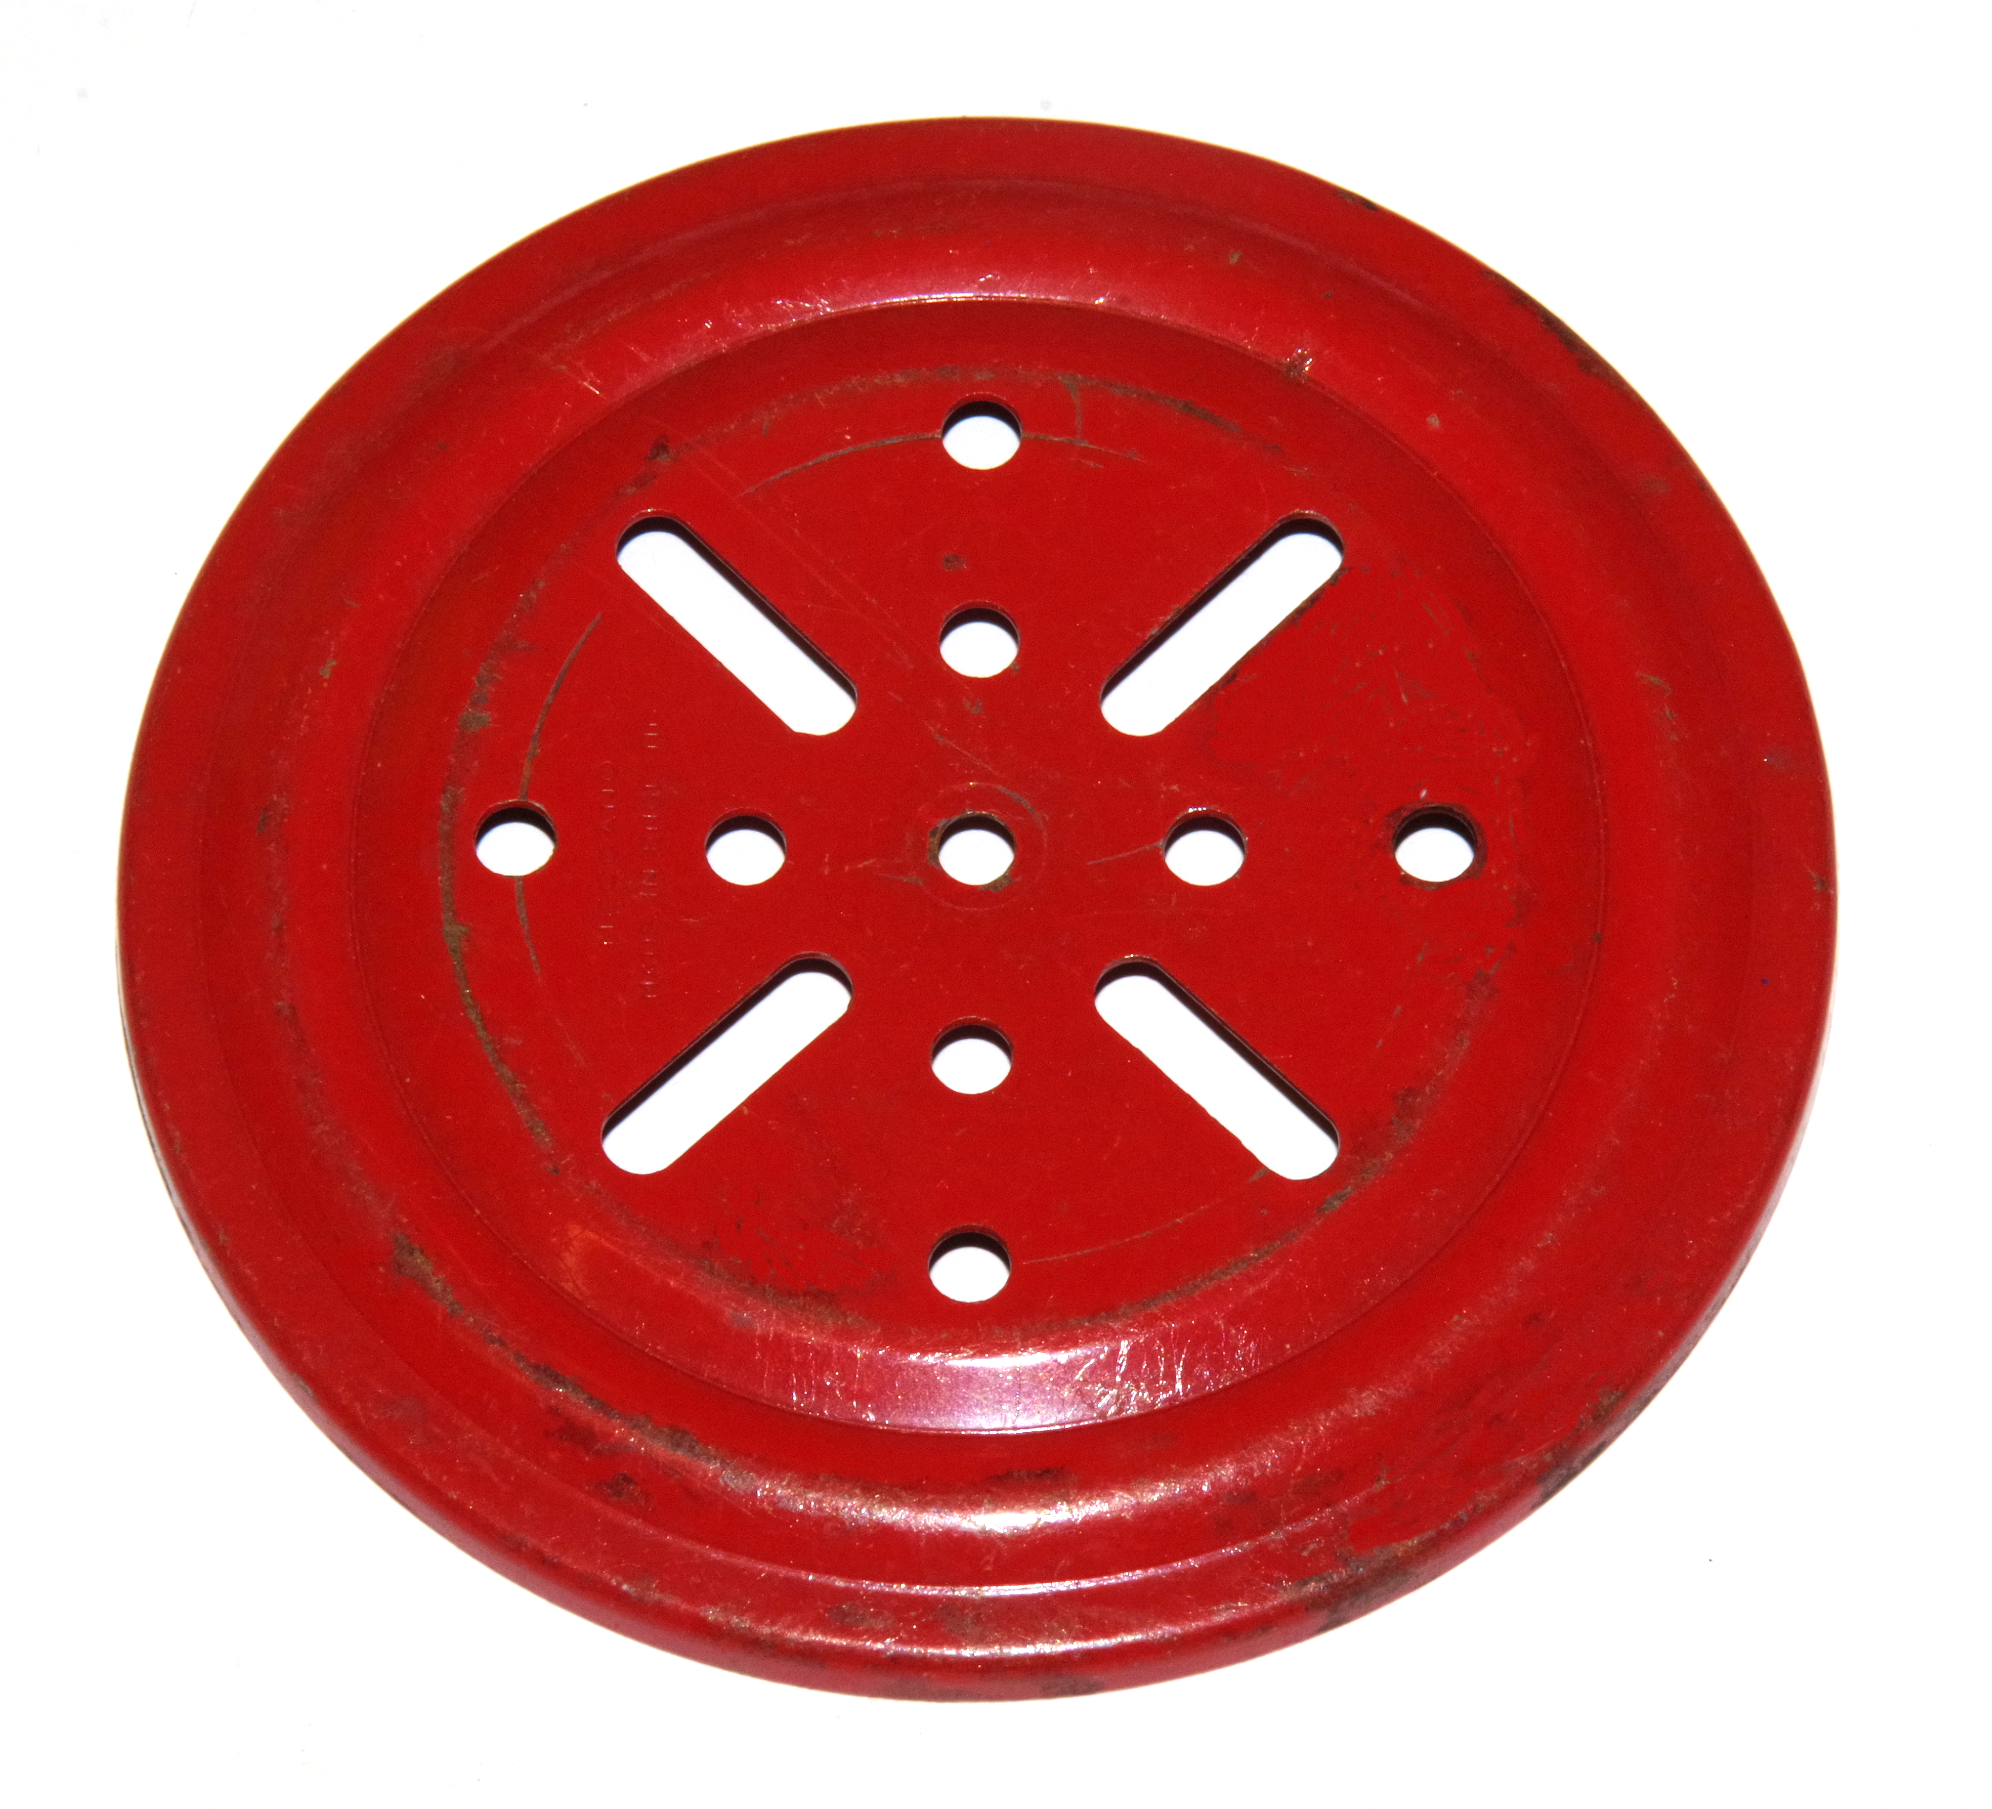 168a Thrust Bearing Flanged Disk 4'' Red Original